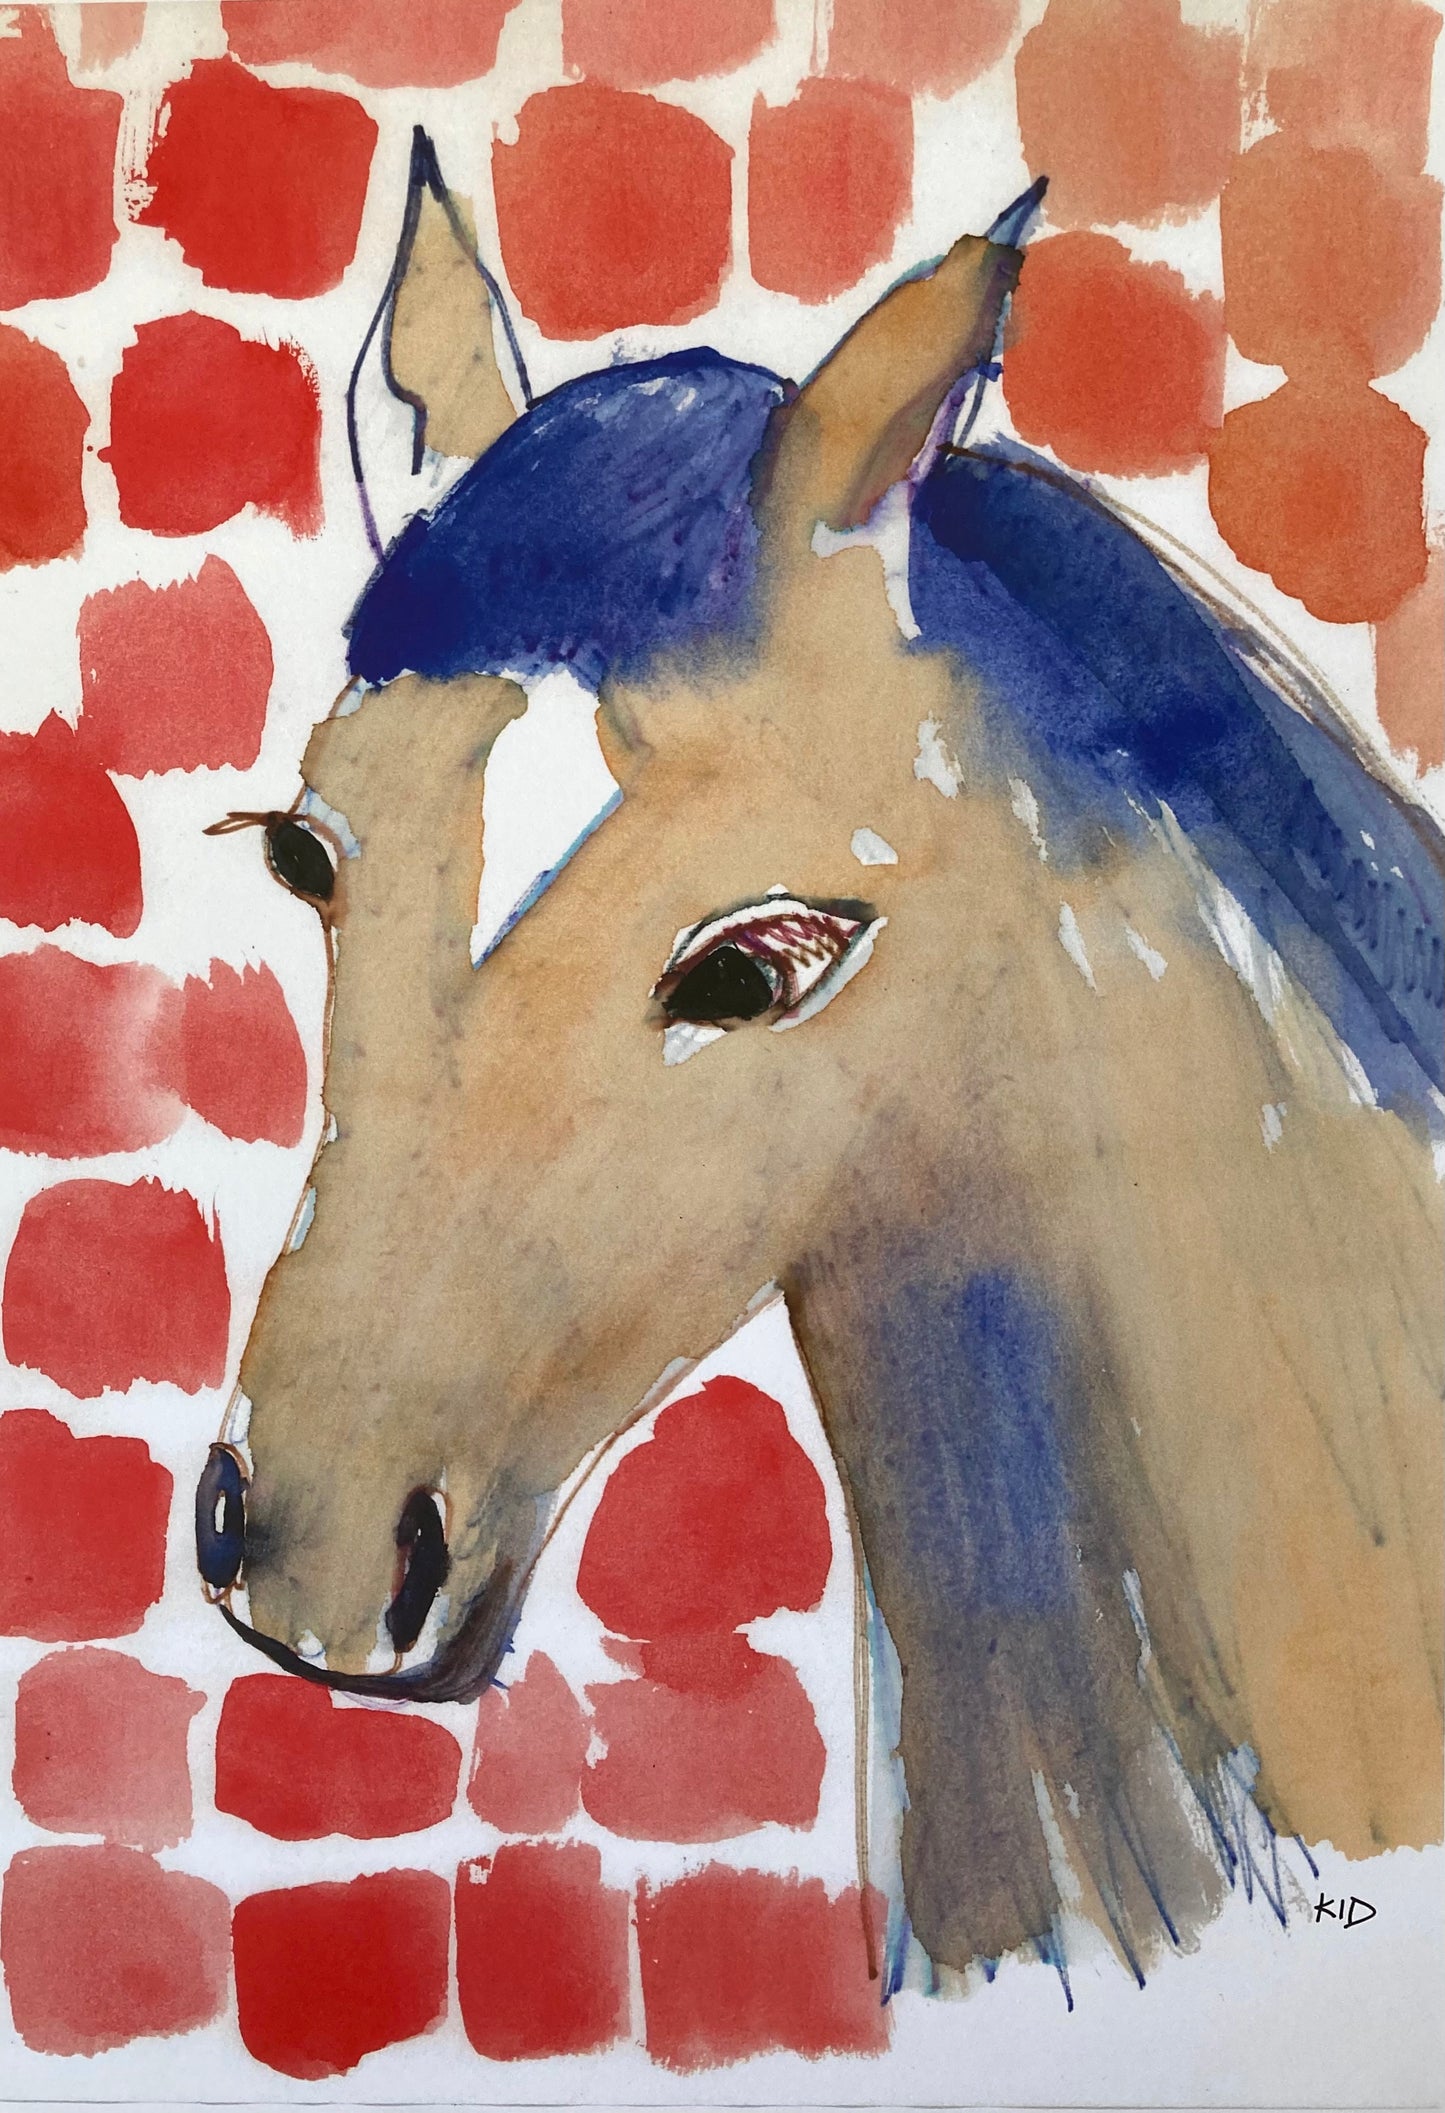 Titel "Horse checked" on print